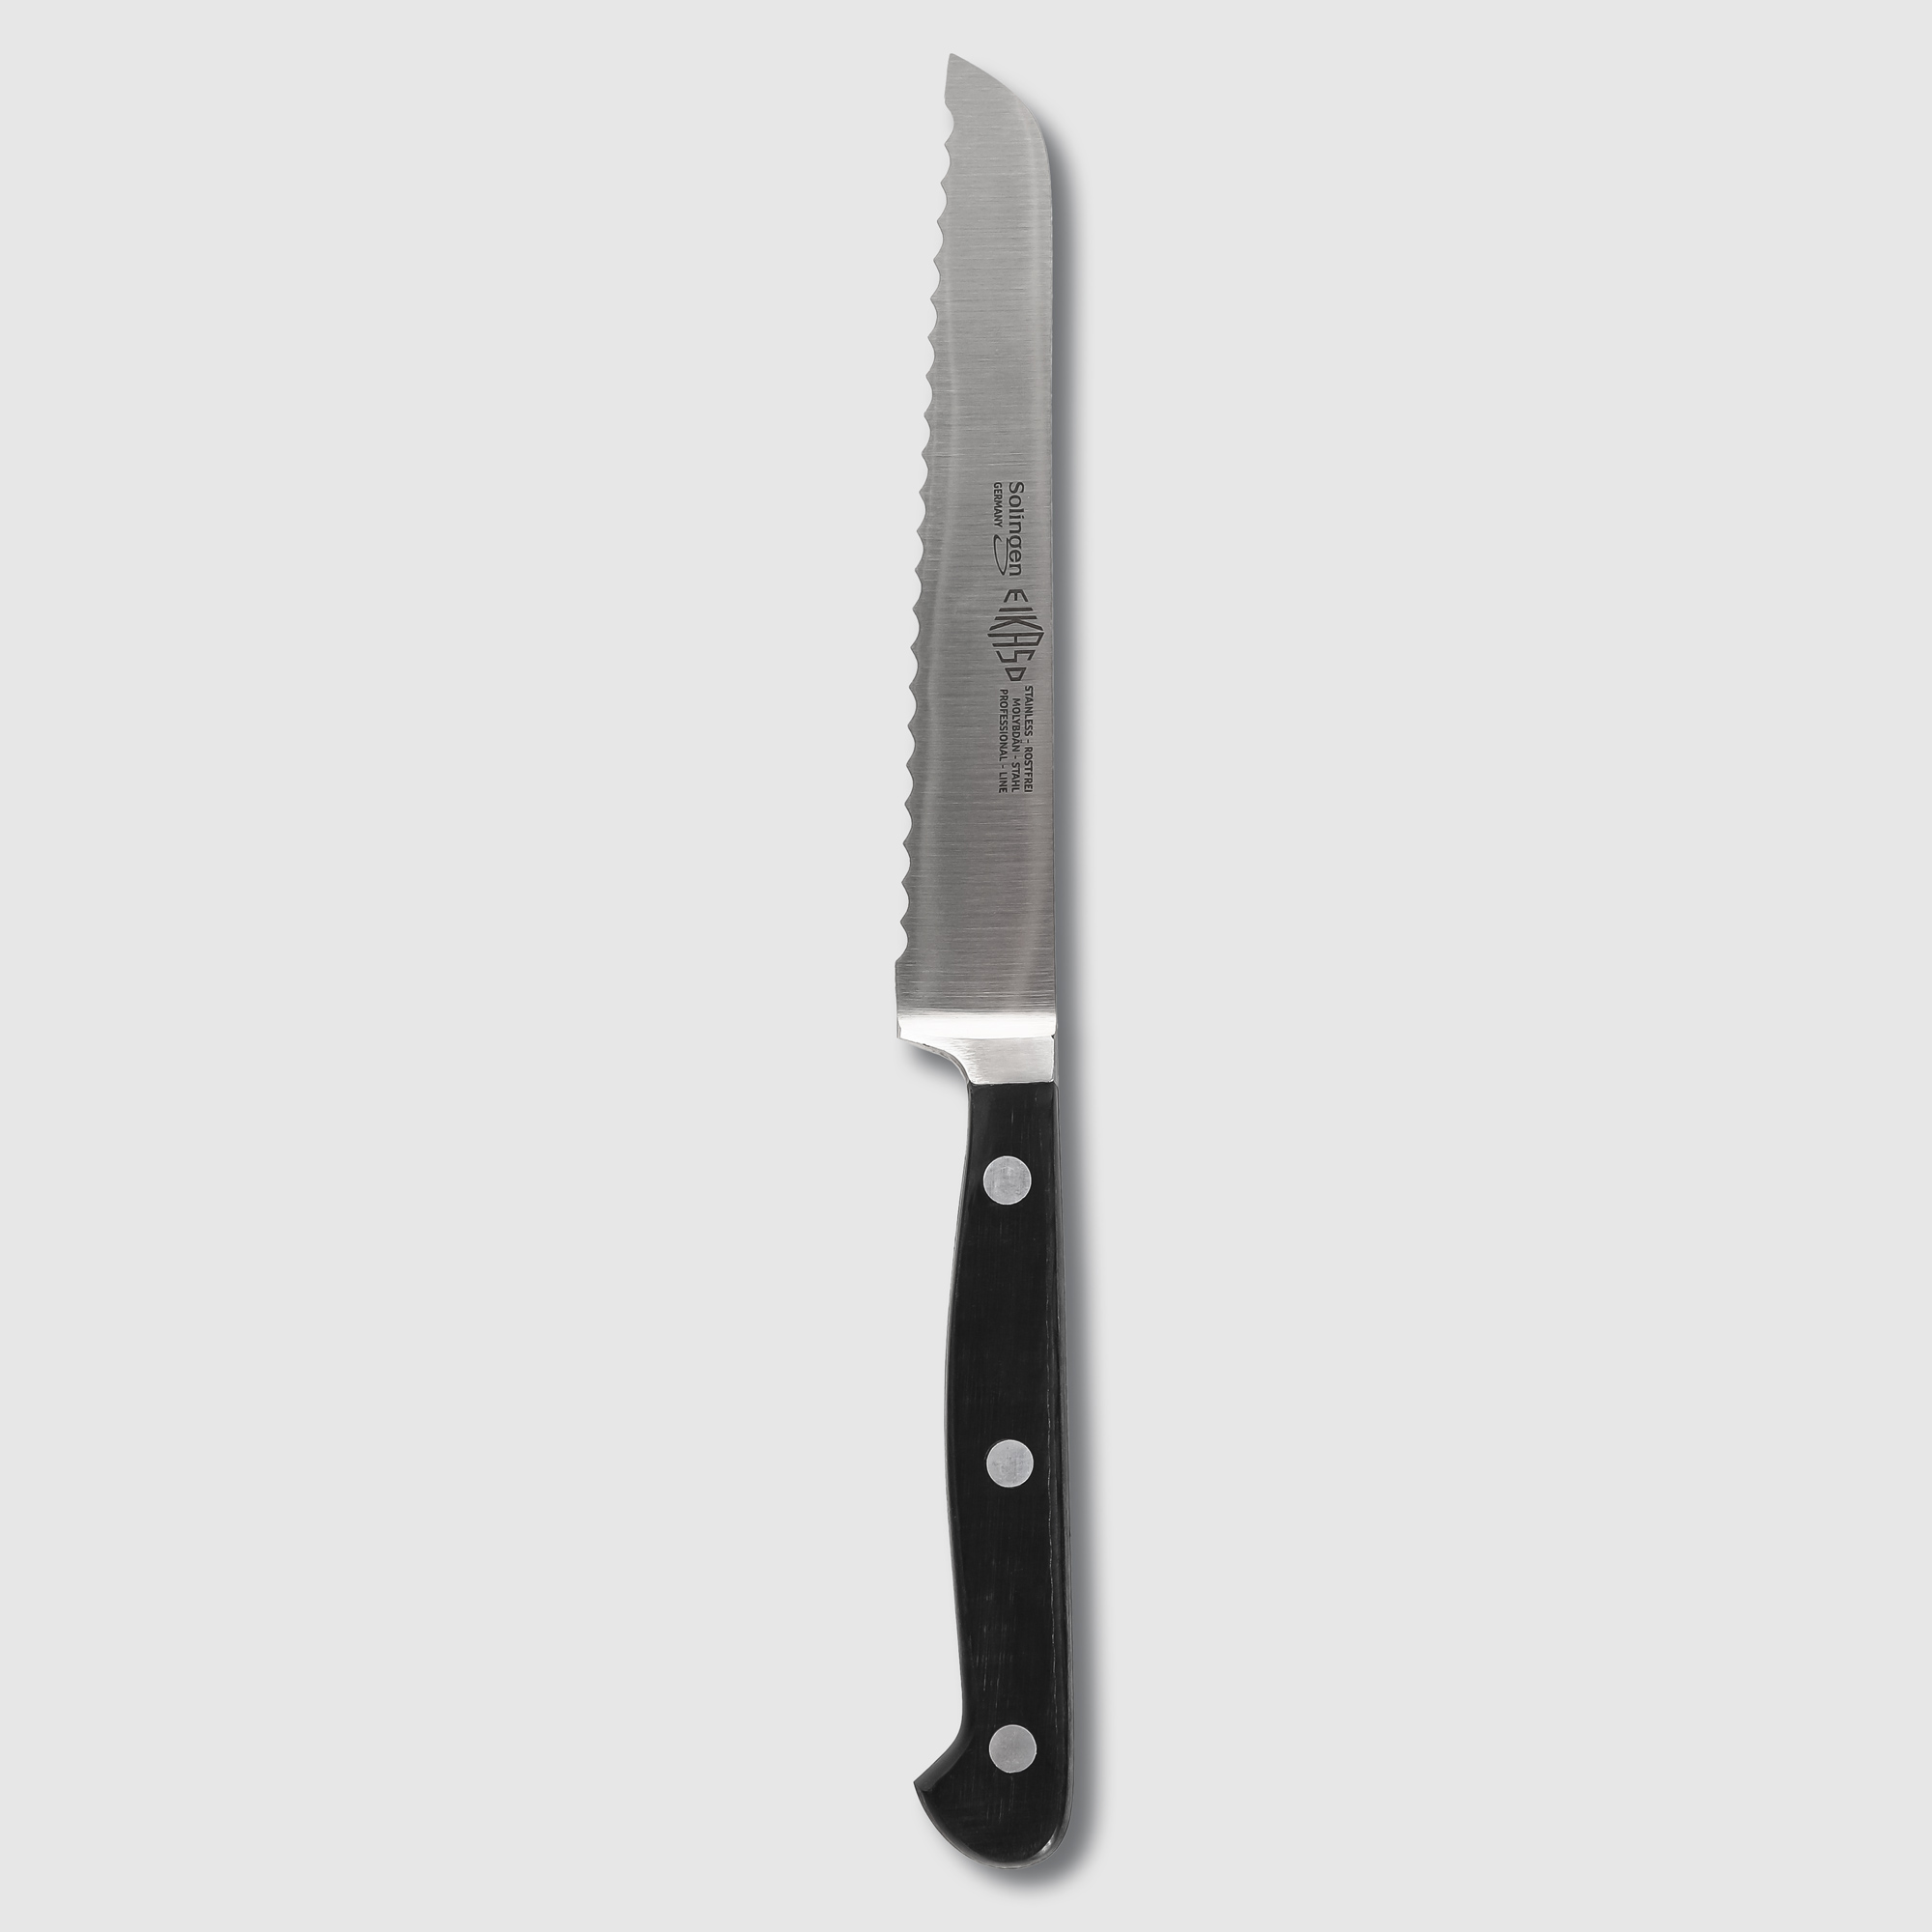 нож eikaso gastro поварской 18 см Нож Eikaso Gastro хлебный 12 см